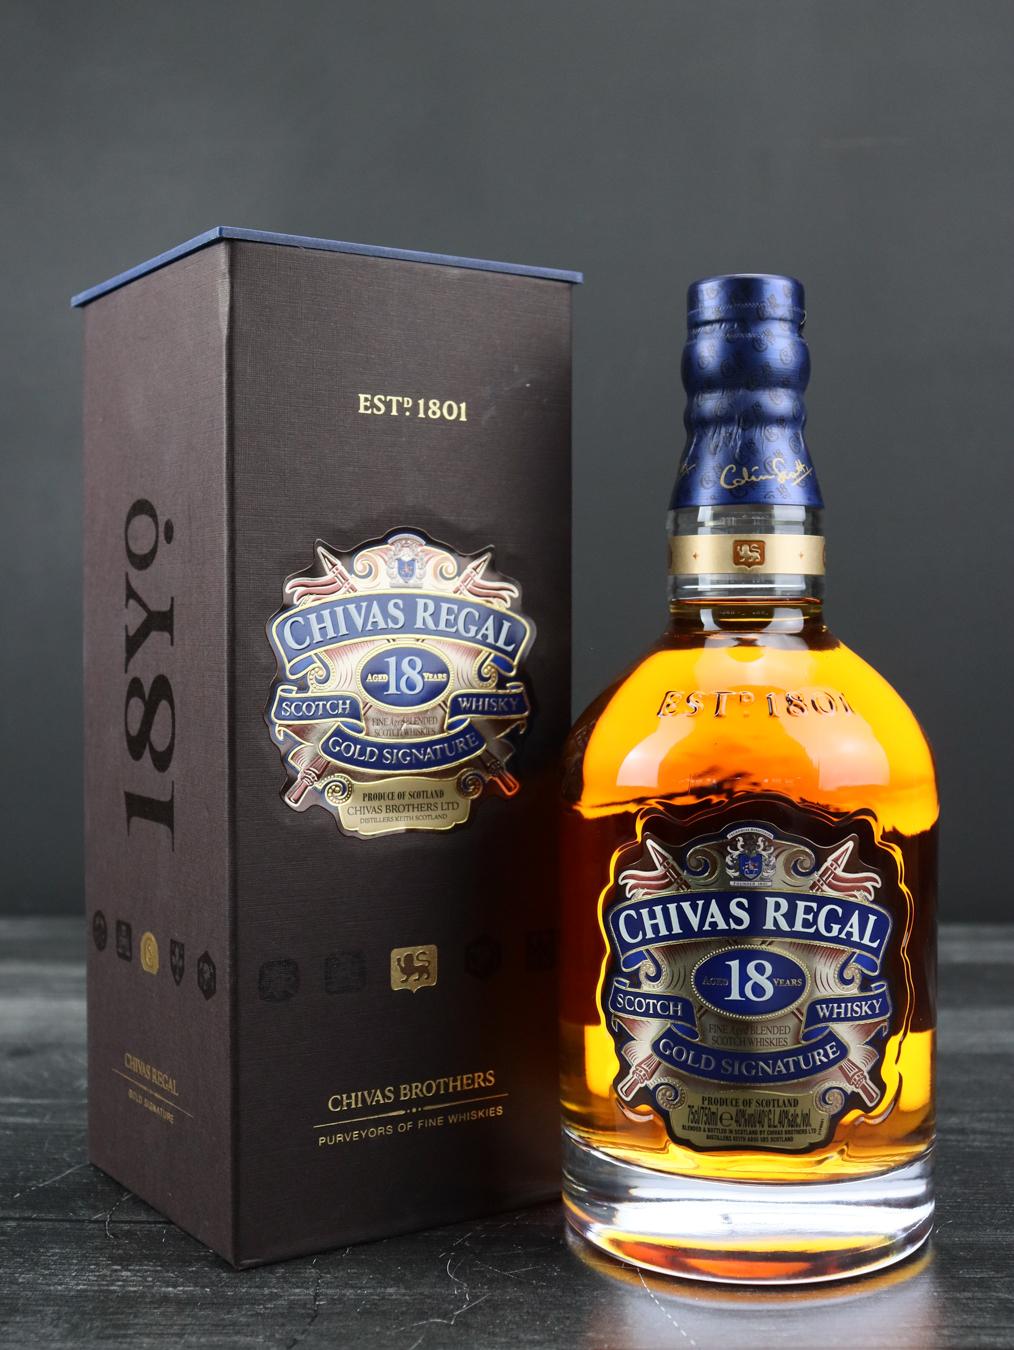 Chivas Regal 18 Year 'Gold Signature' Scotch Whisky